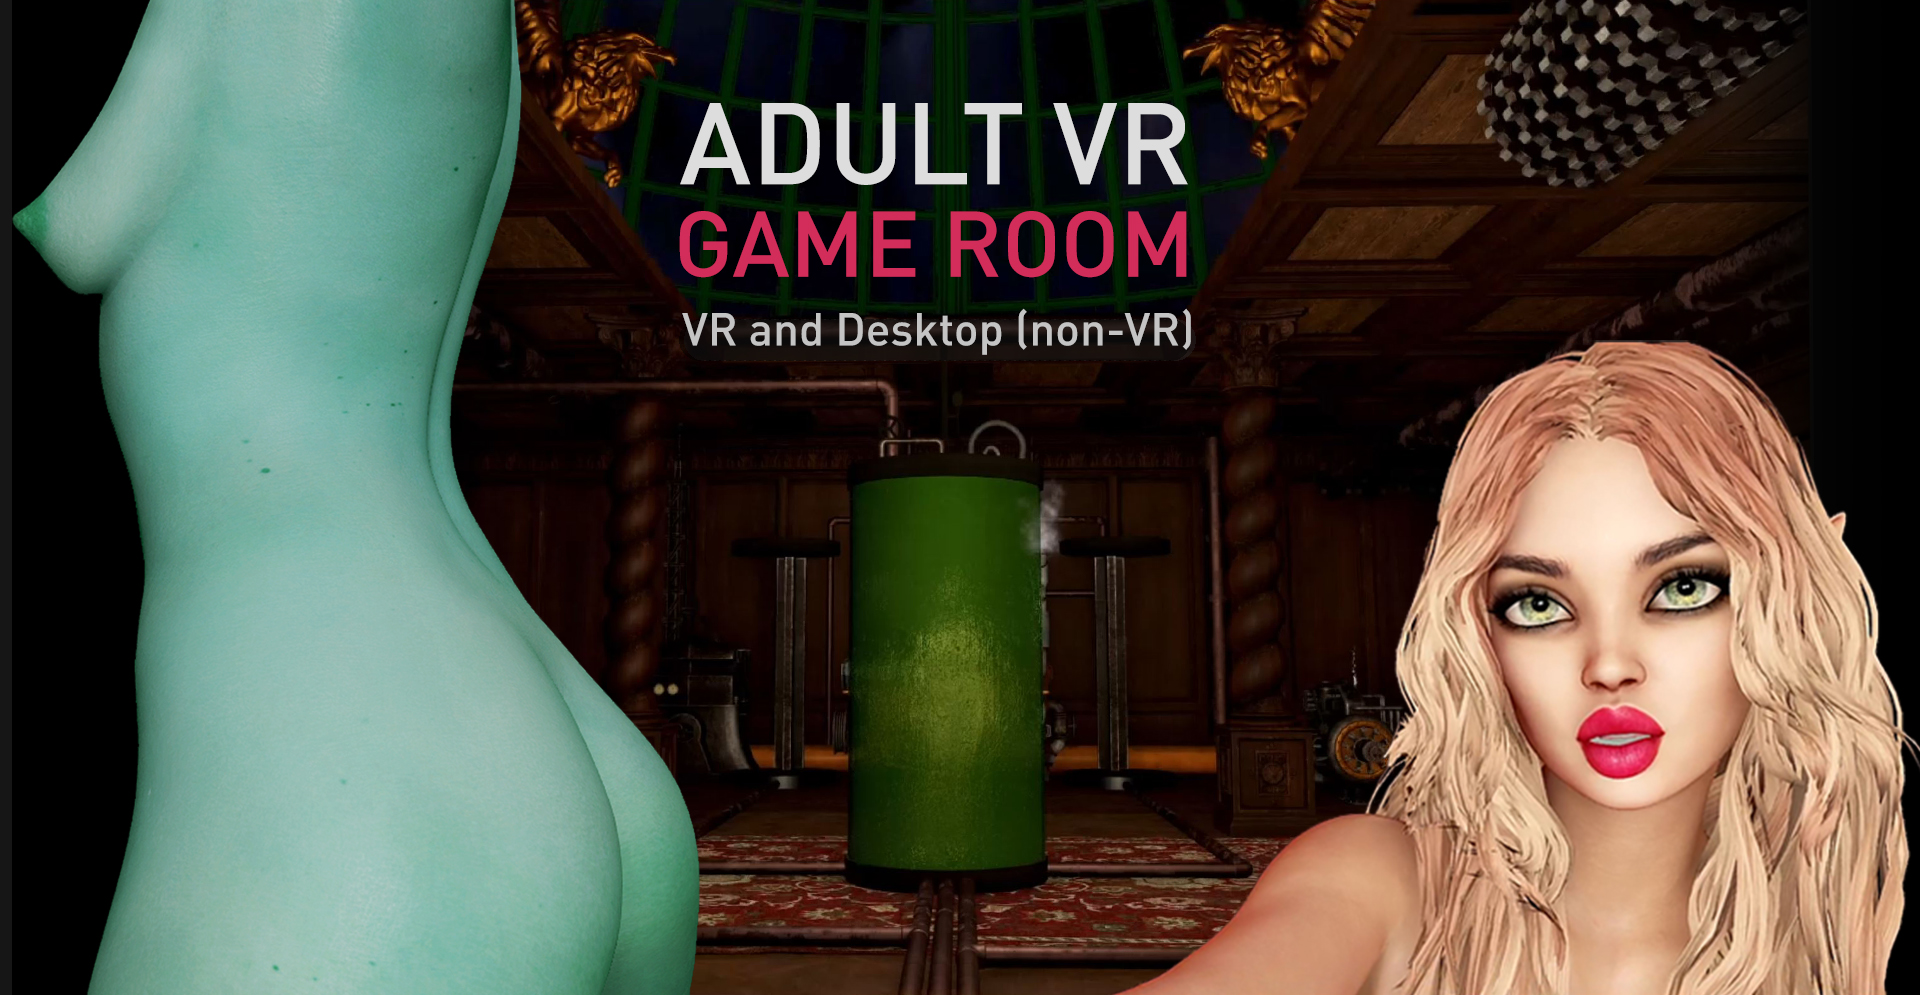 Adult vr game room